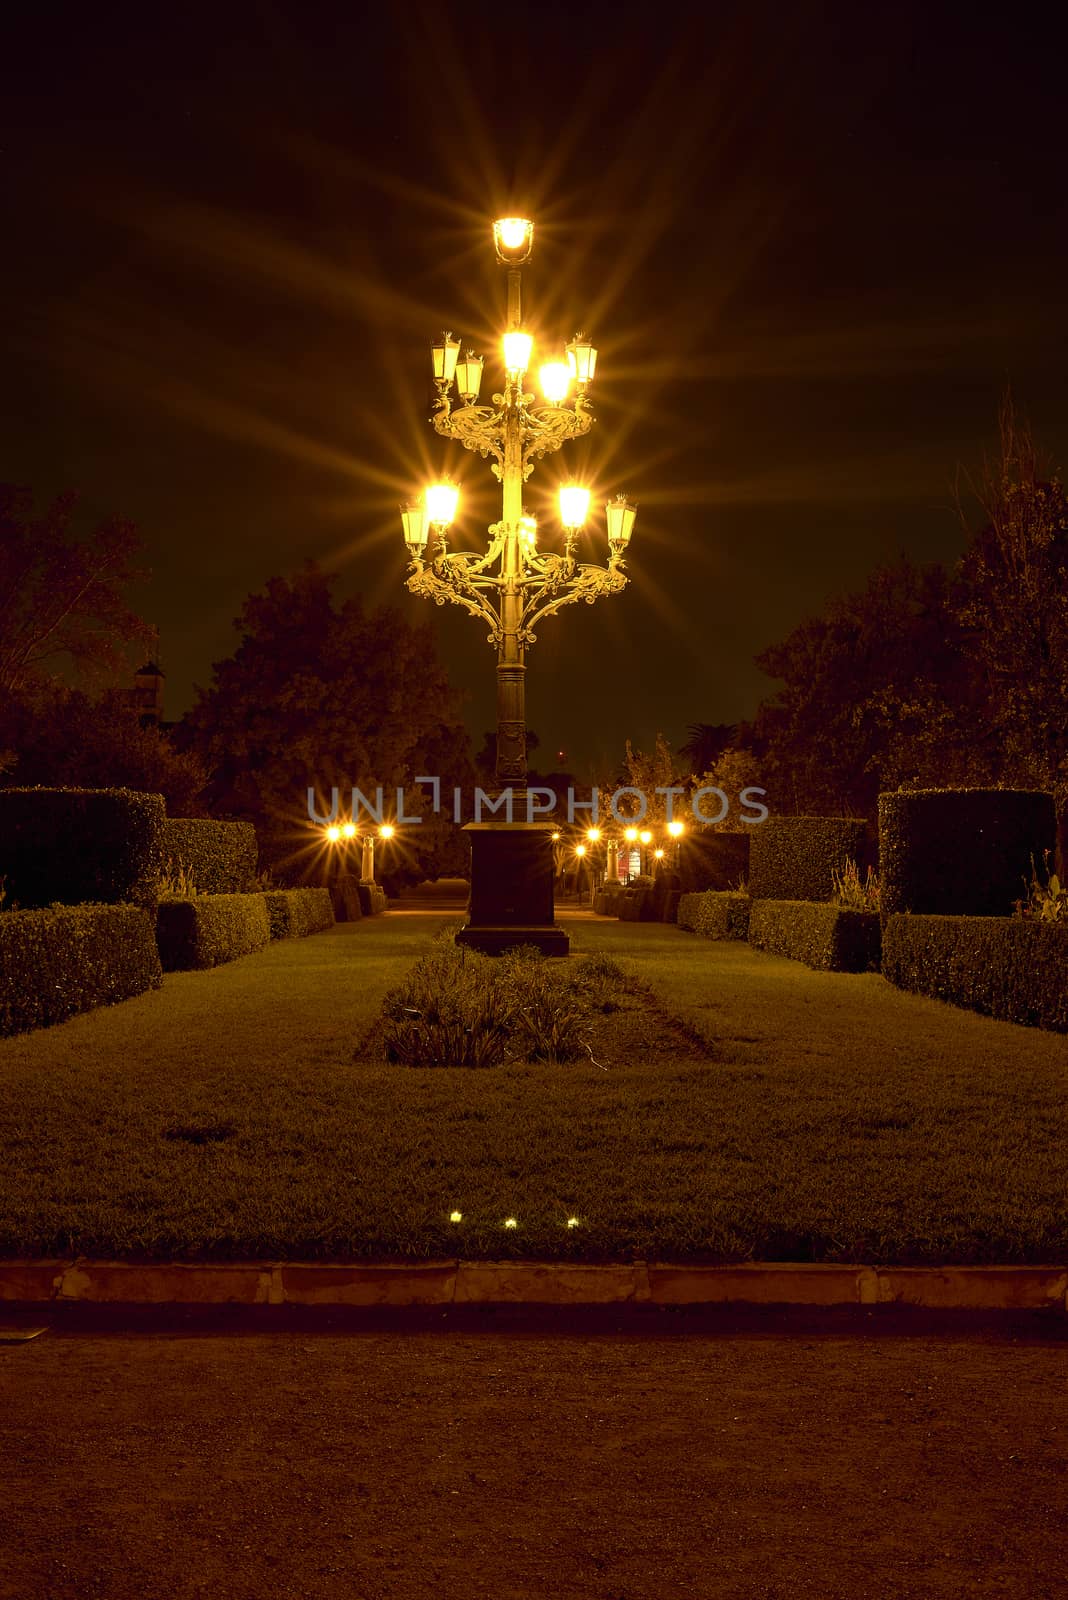 Ornamental lamppost in nice romantic night garden by raul_ruiz